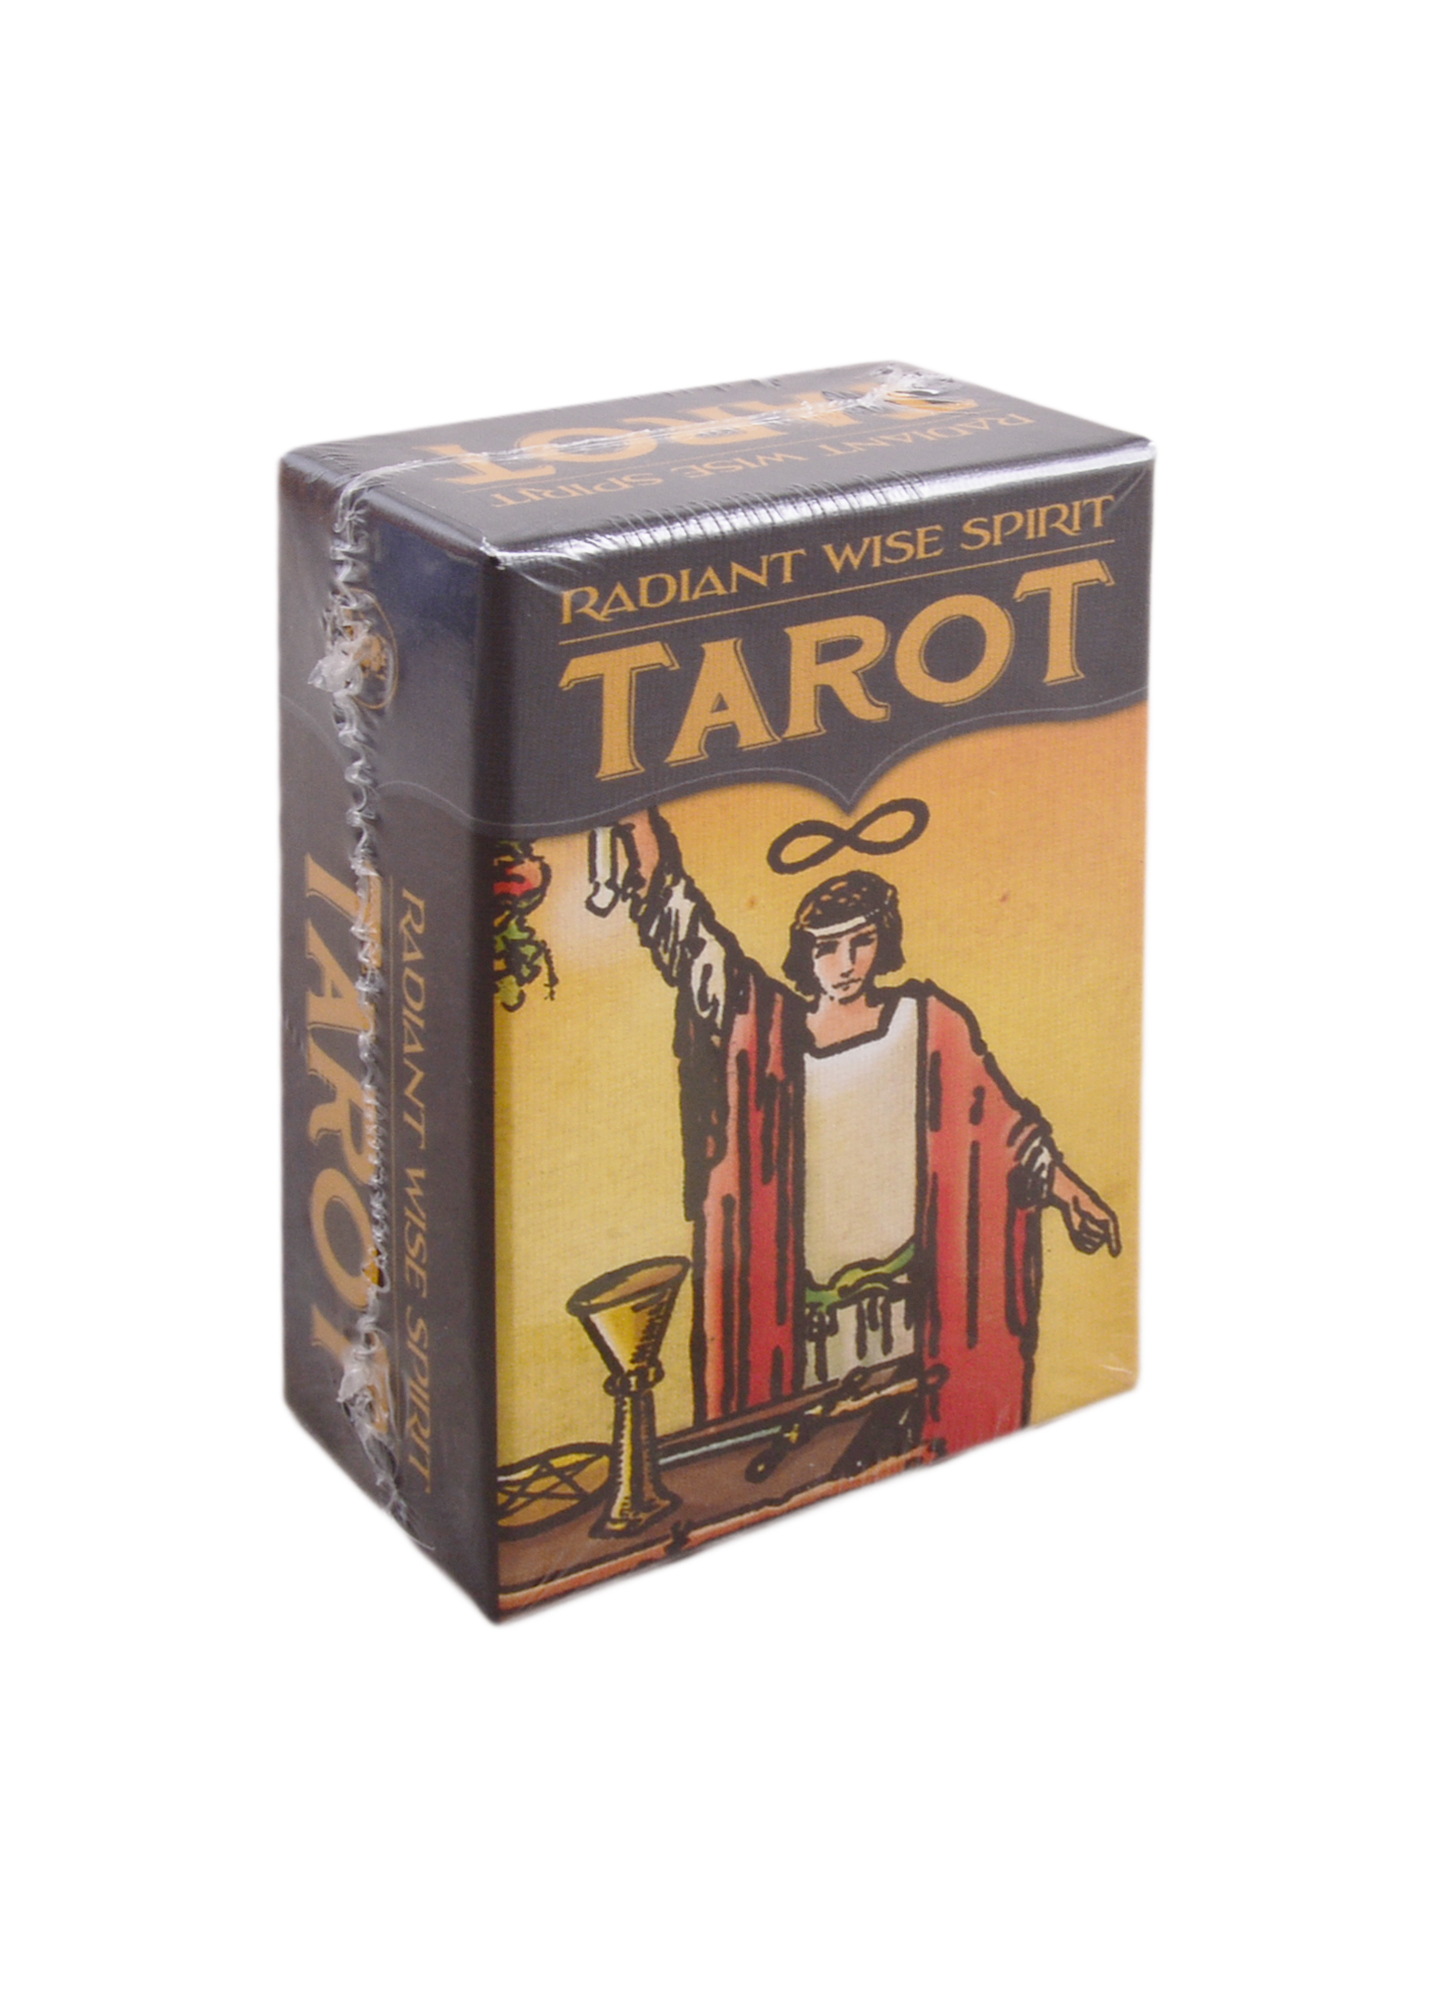 Radiant Wise Spirit Tarot таро radiant wise spirit tarot 78 карт и книга